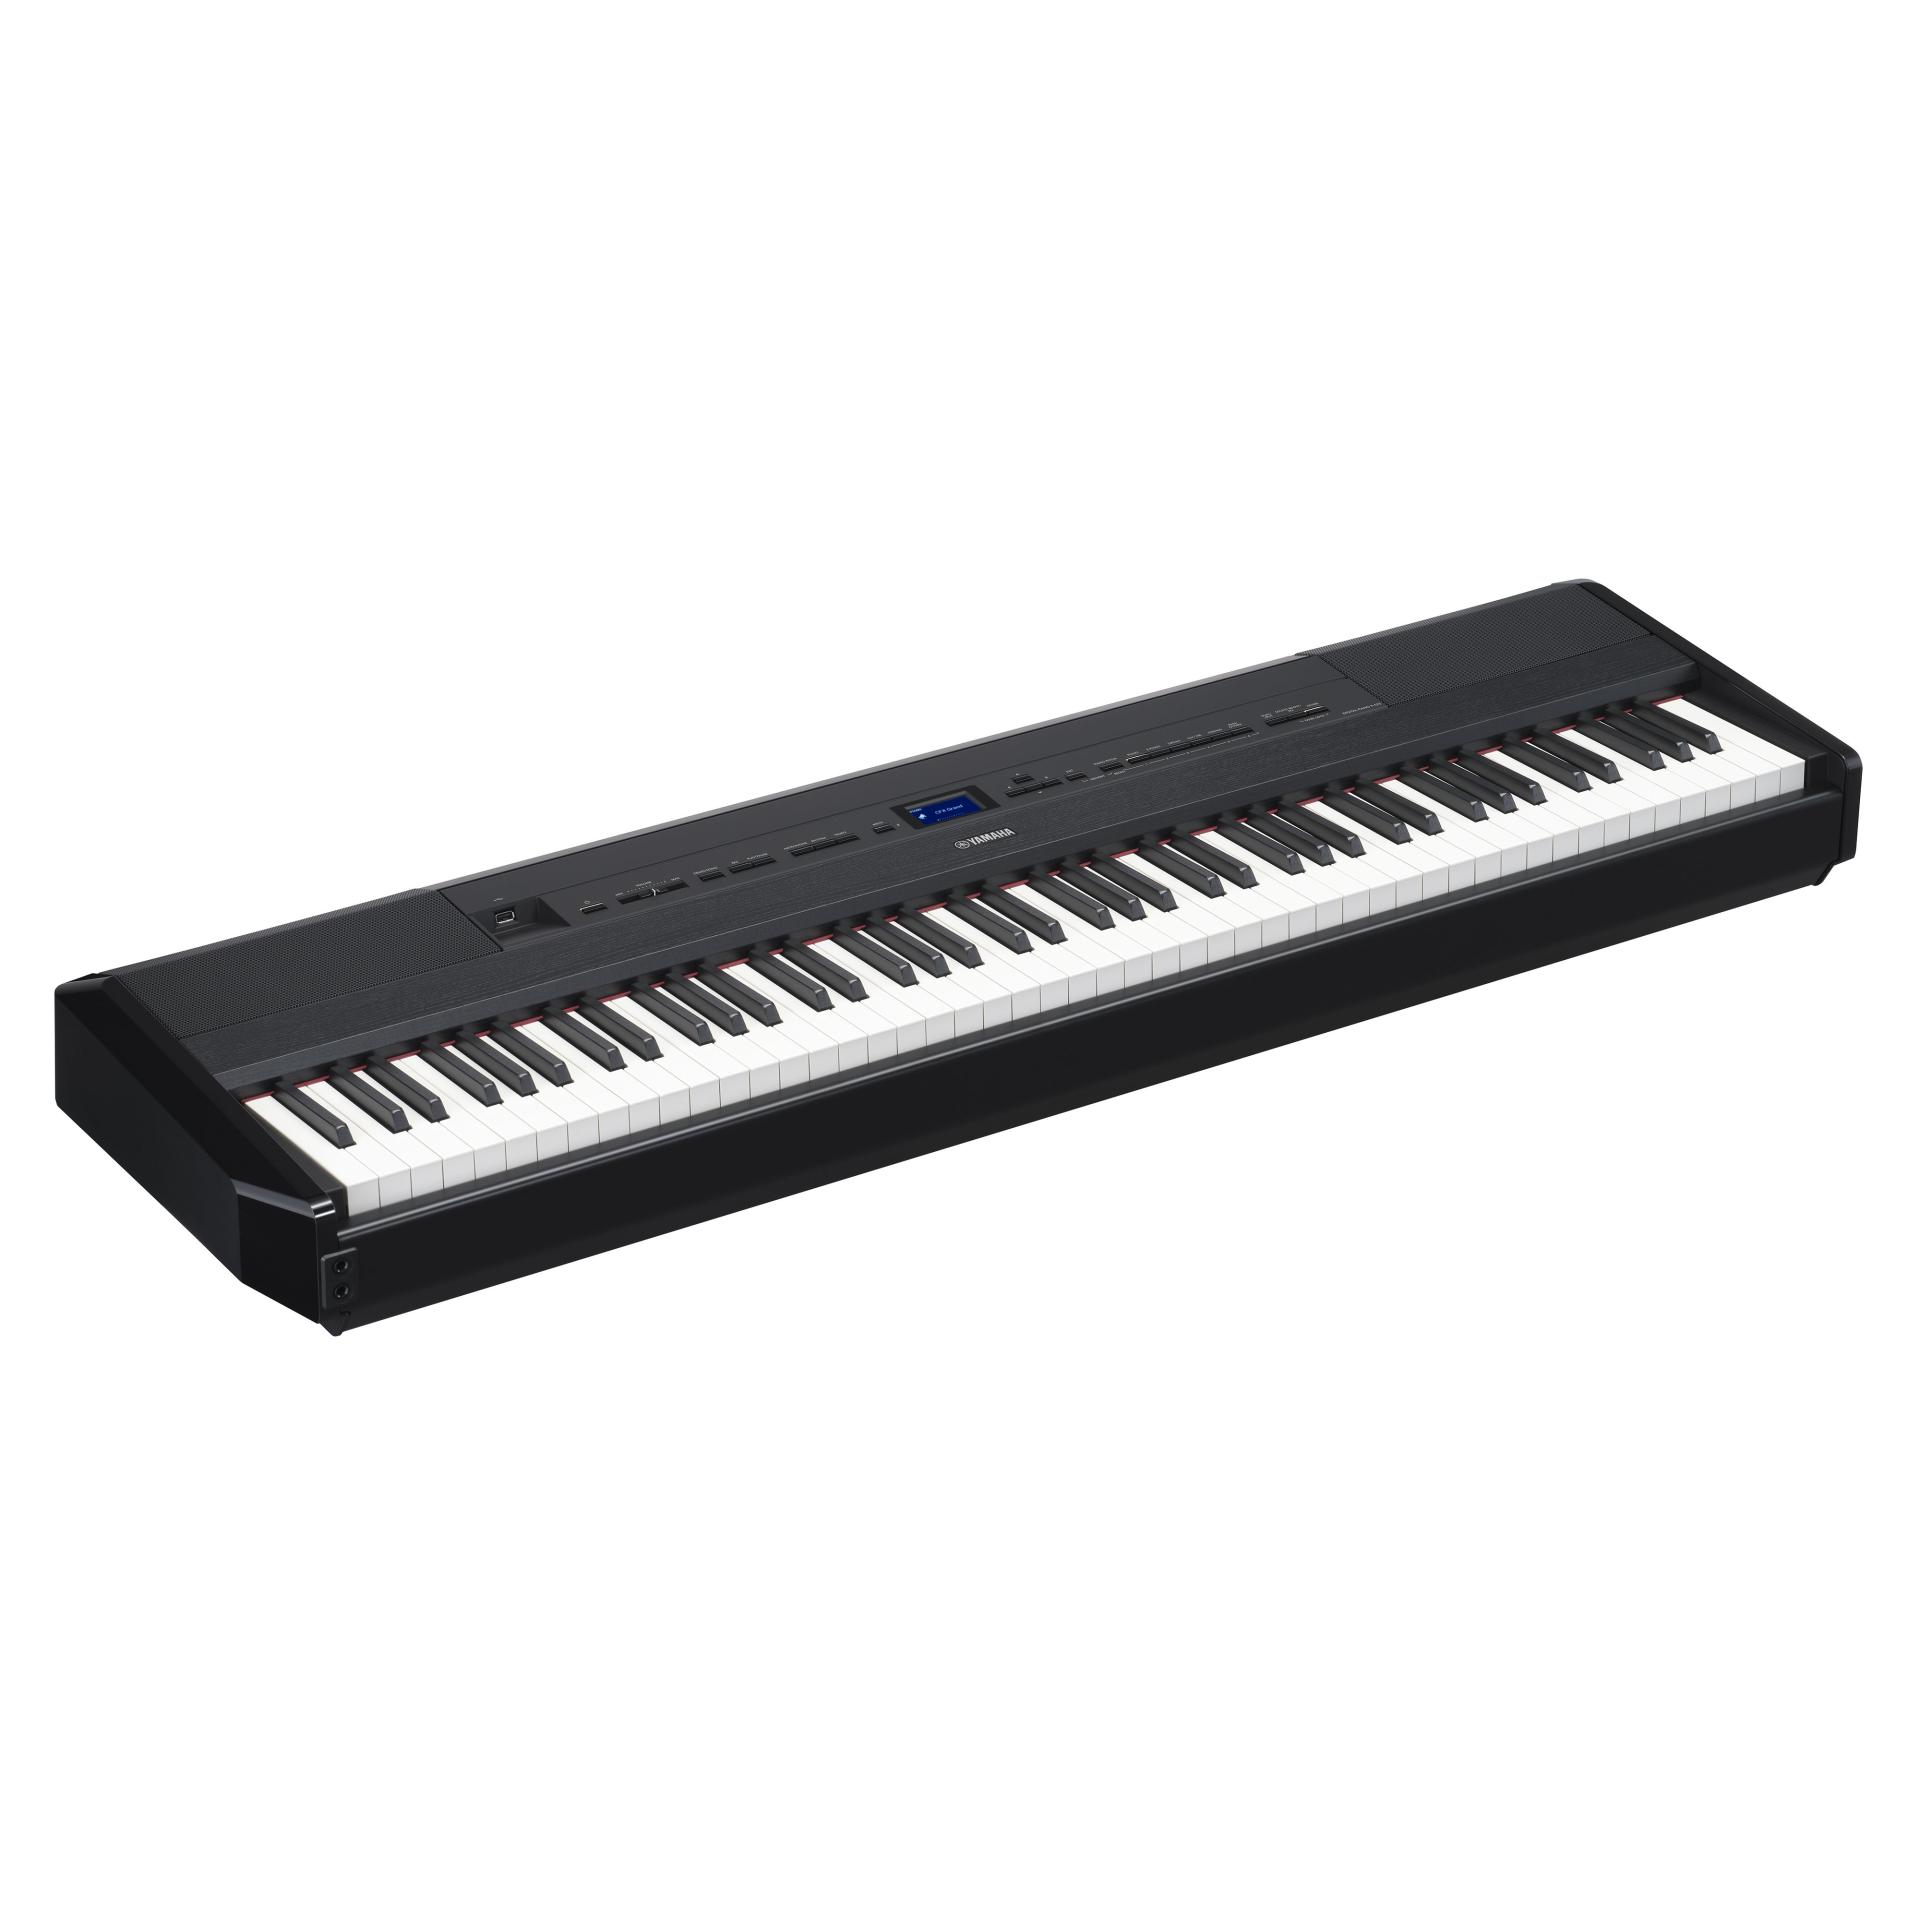 Piano portable YAMAHA piano P525-B noir avec clavier Grantouch S